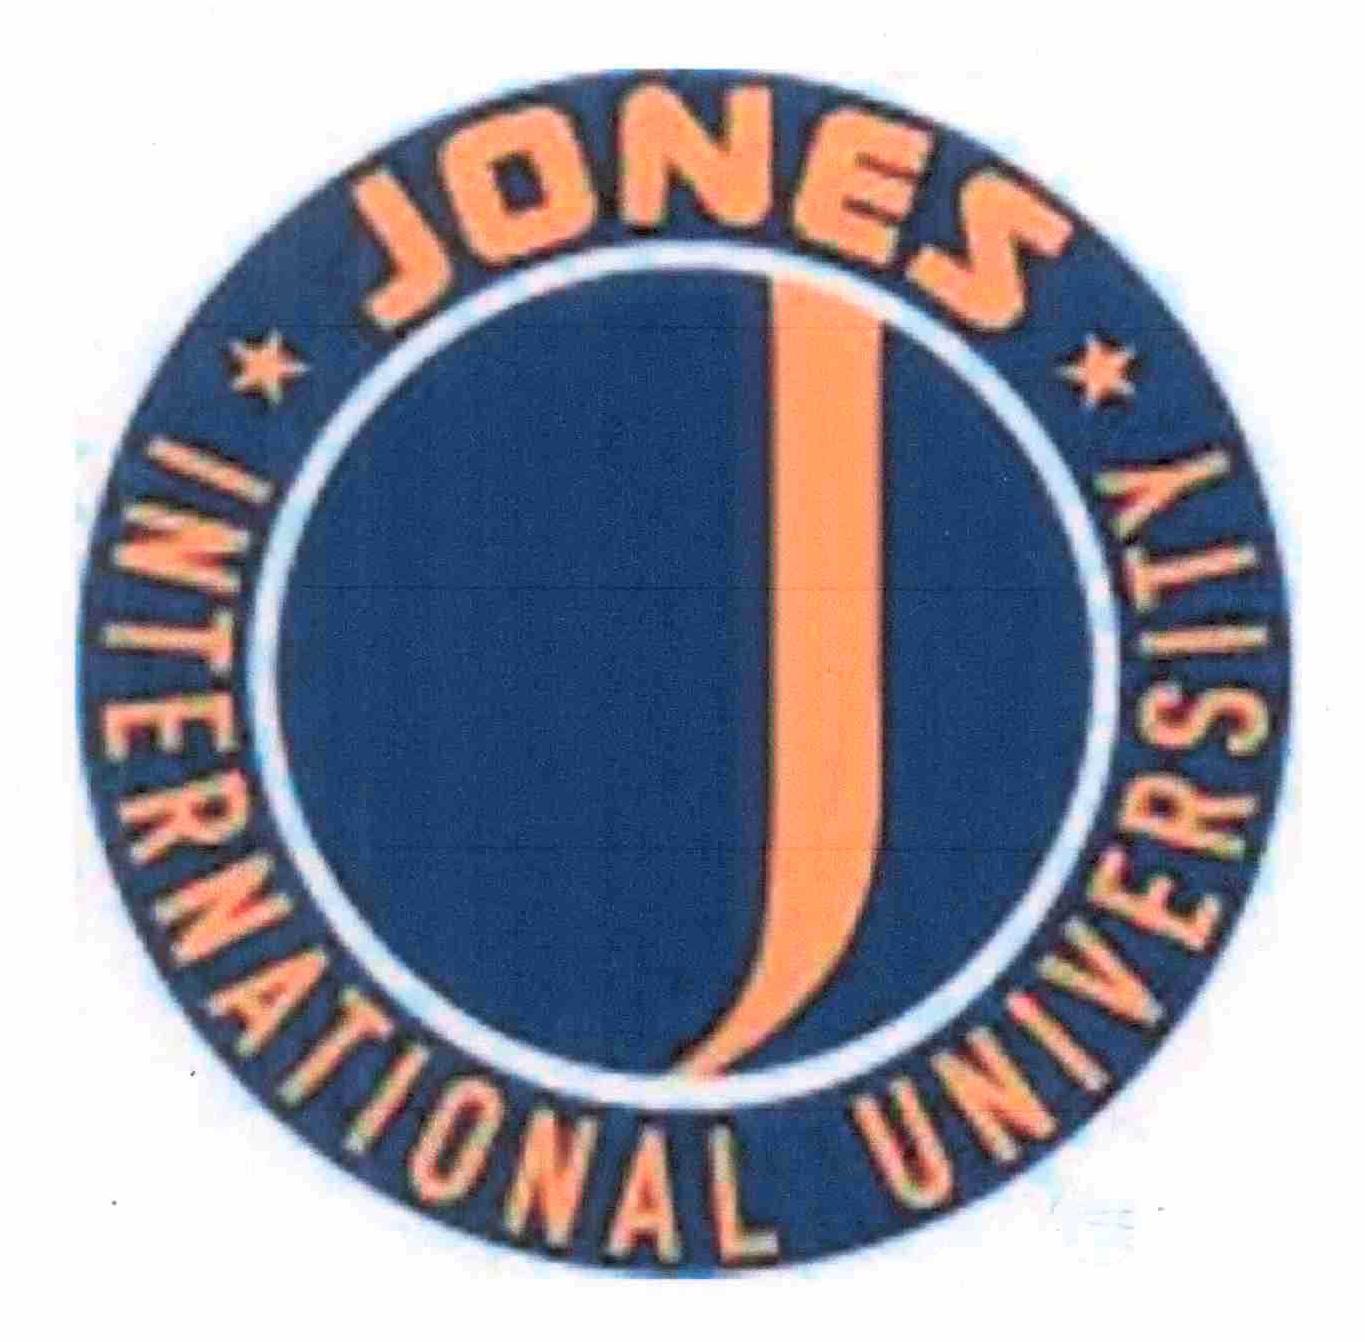  J JONES INTERNATIONAL UNIVERSITY